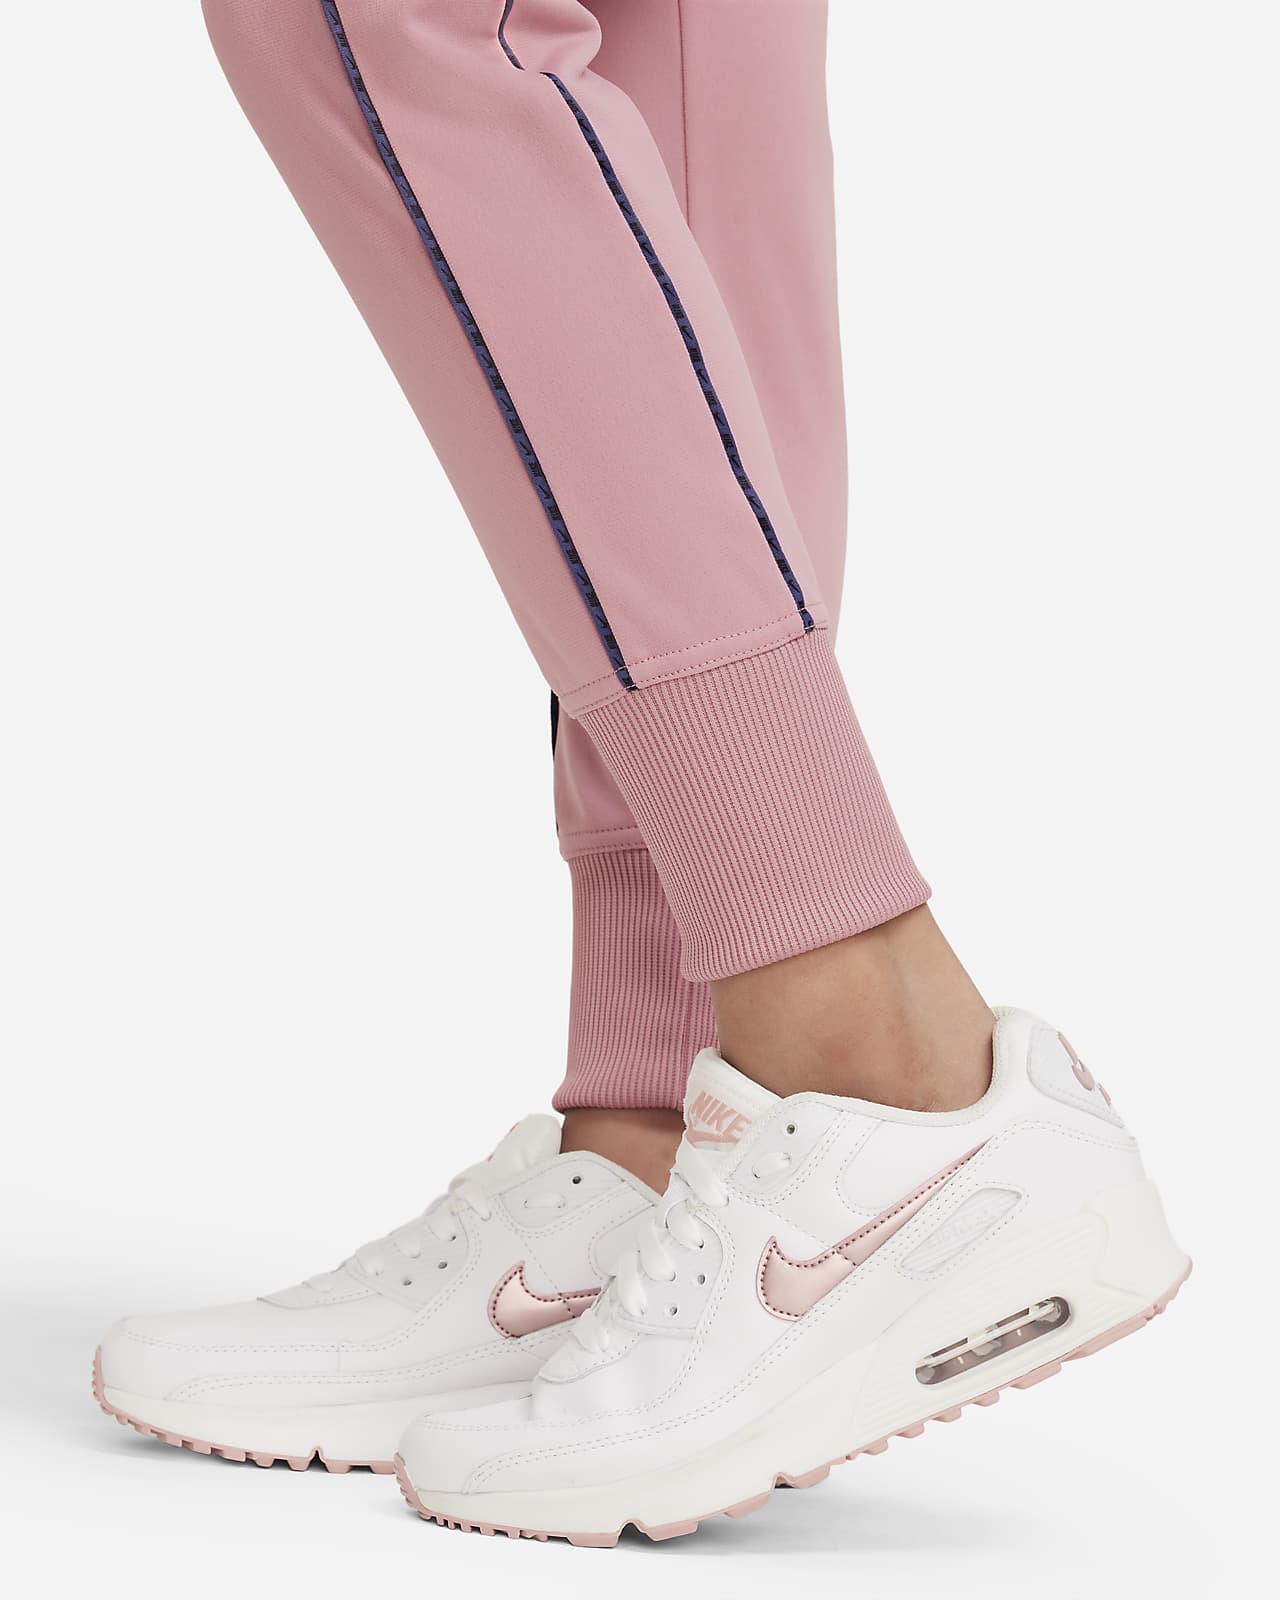 Buy Nike Sportswear Tracksuit Girls Black, White online